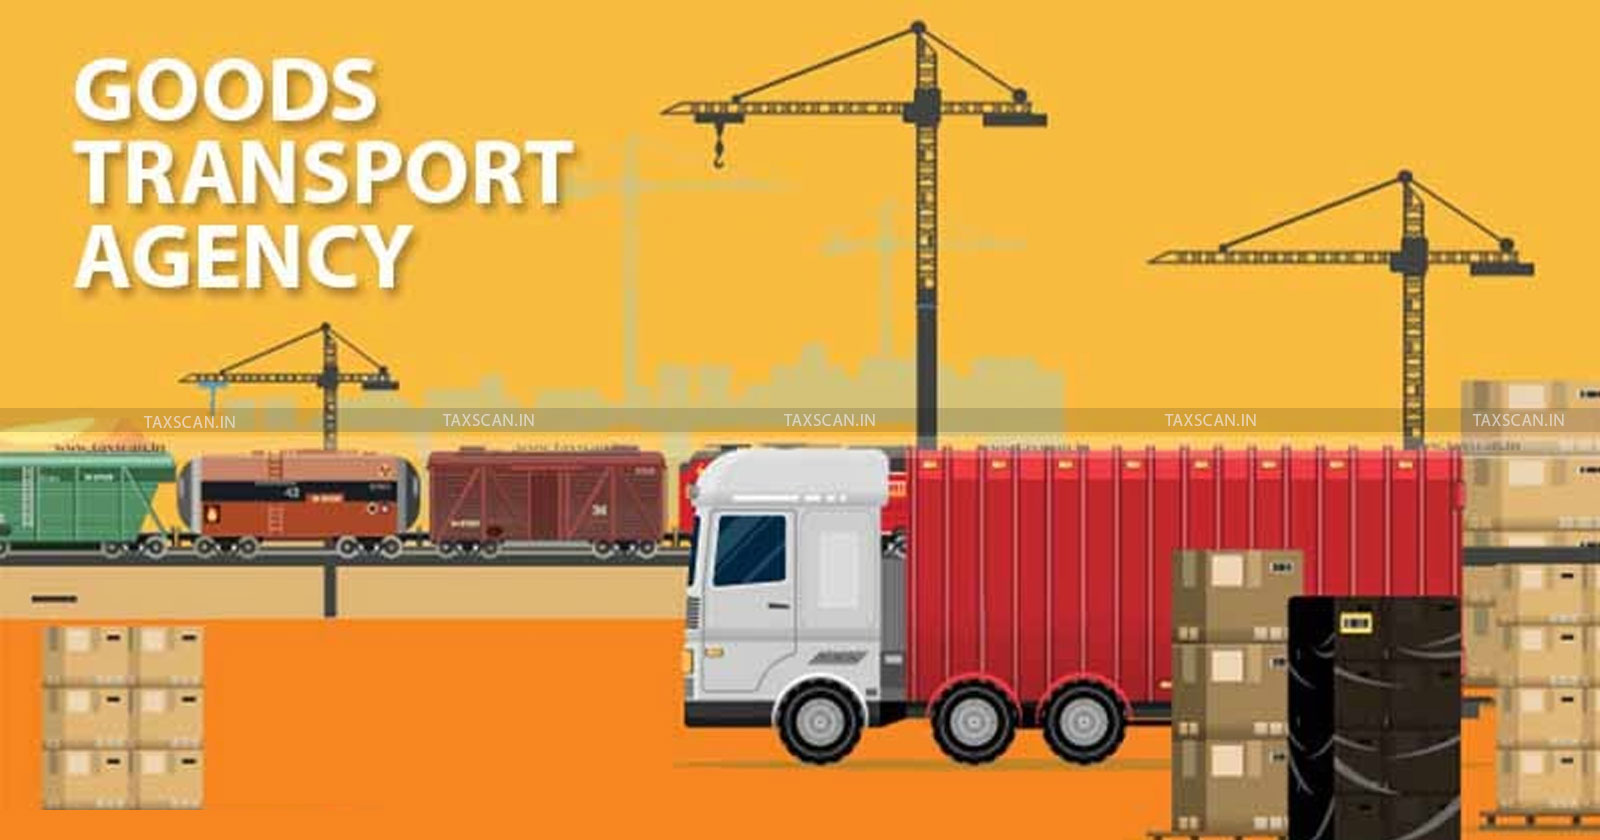 Goods Transport Agency - Service Tax - Goods Transport Agency - taxscan